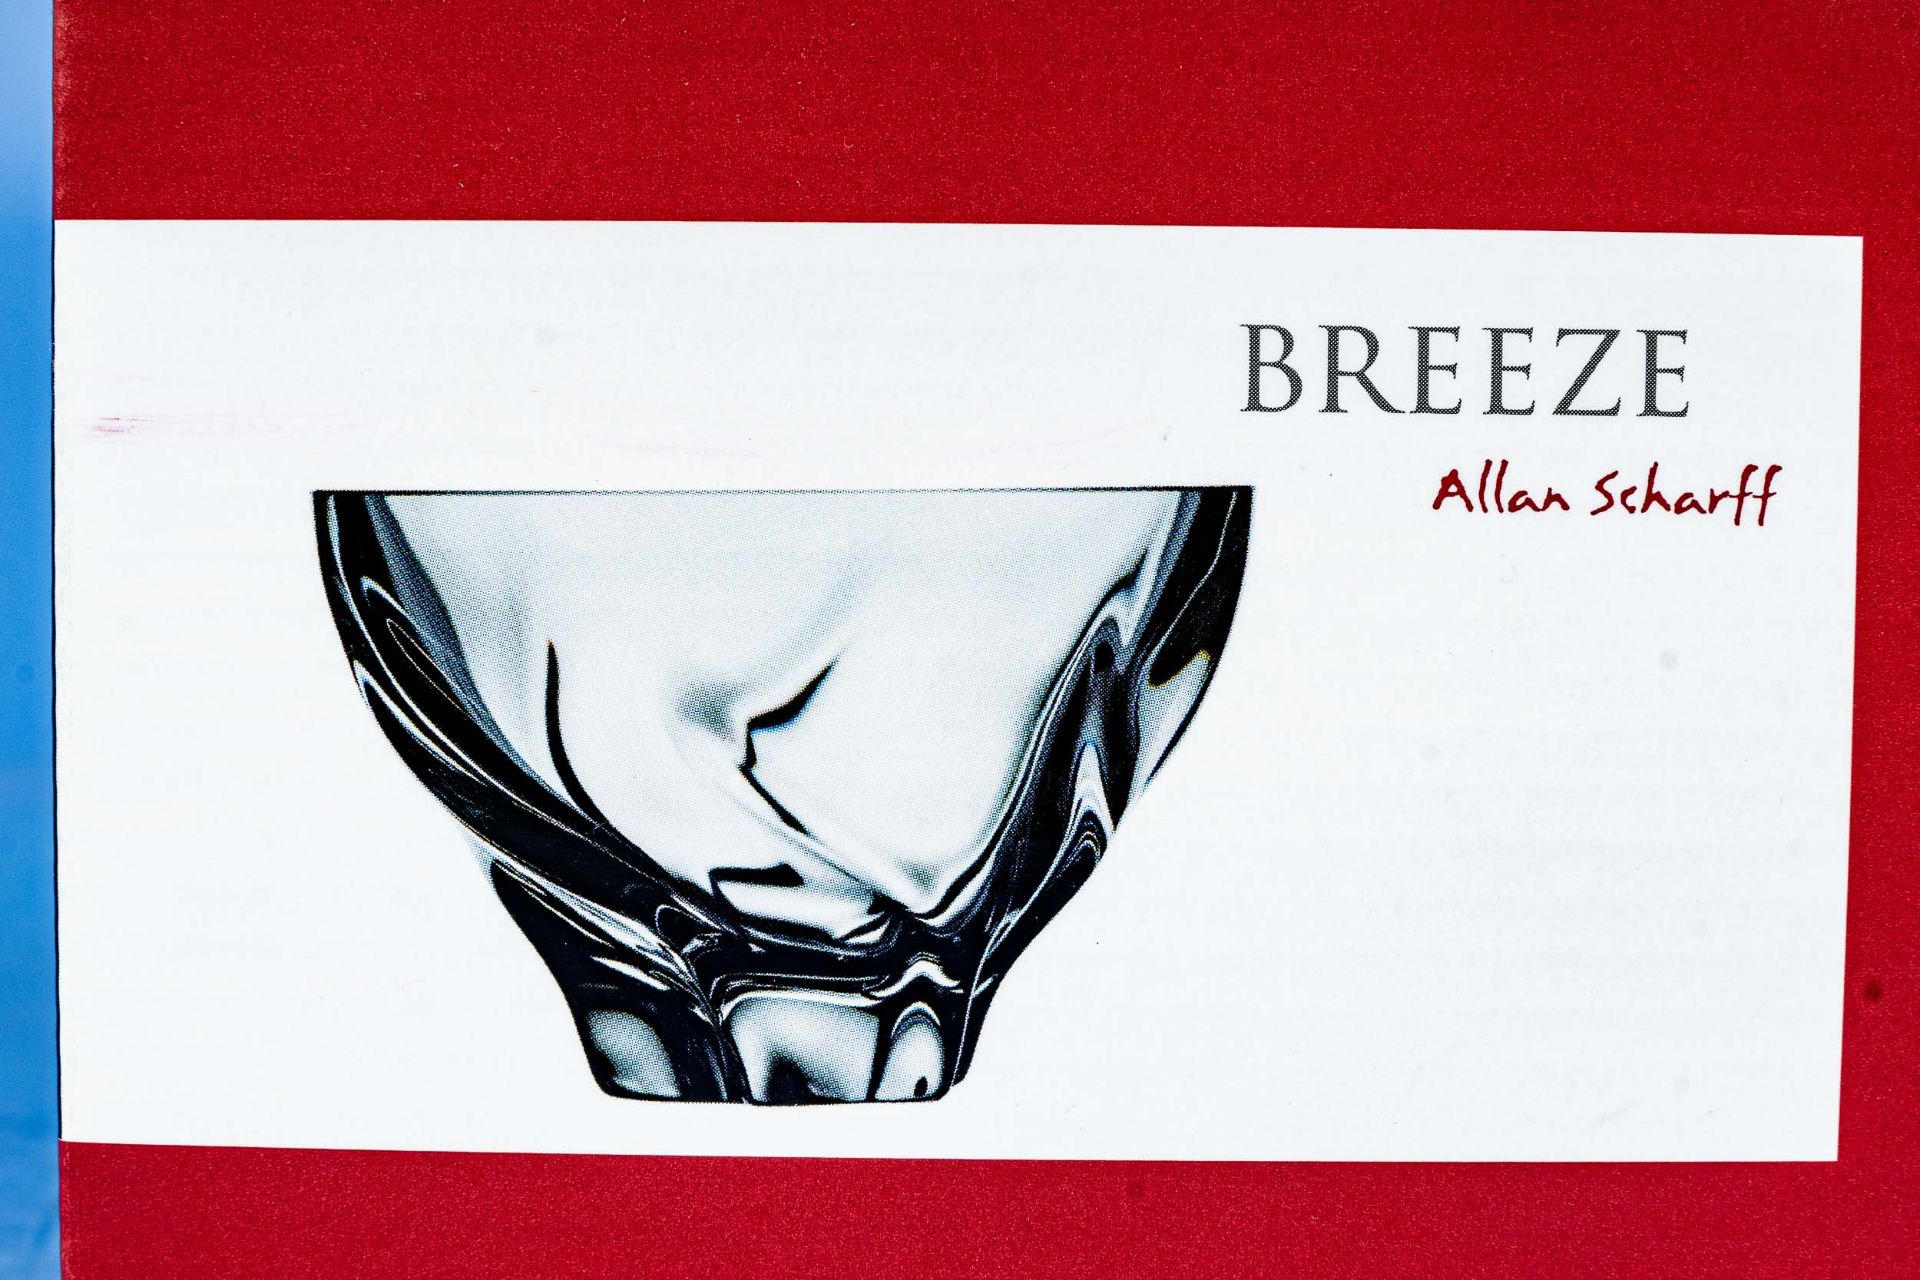 "BREEZE" Fußschale, farbloses, dickwandiges Kristallglas der Marke Holmegard, designed by Allan Sch - Image 6 of 6